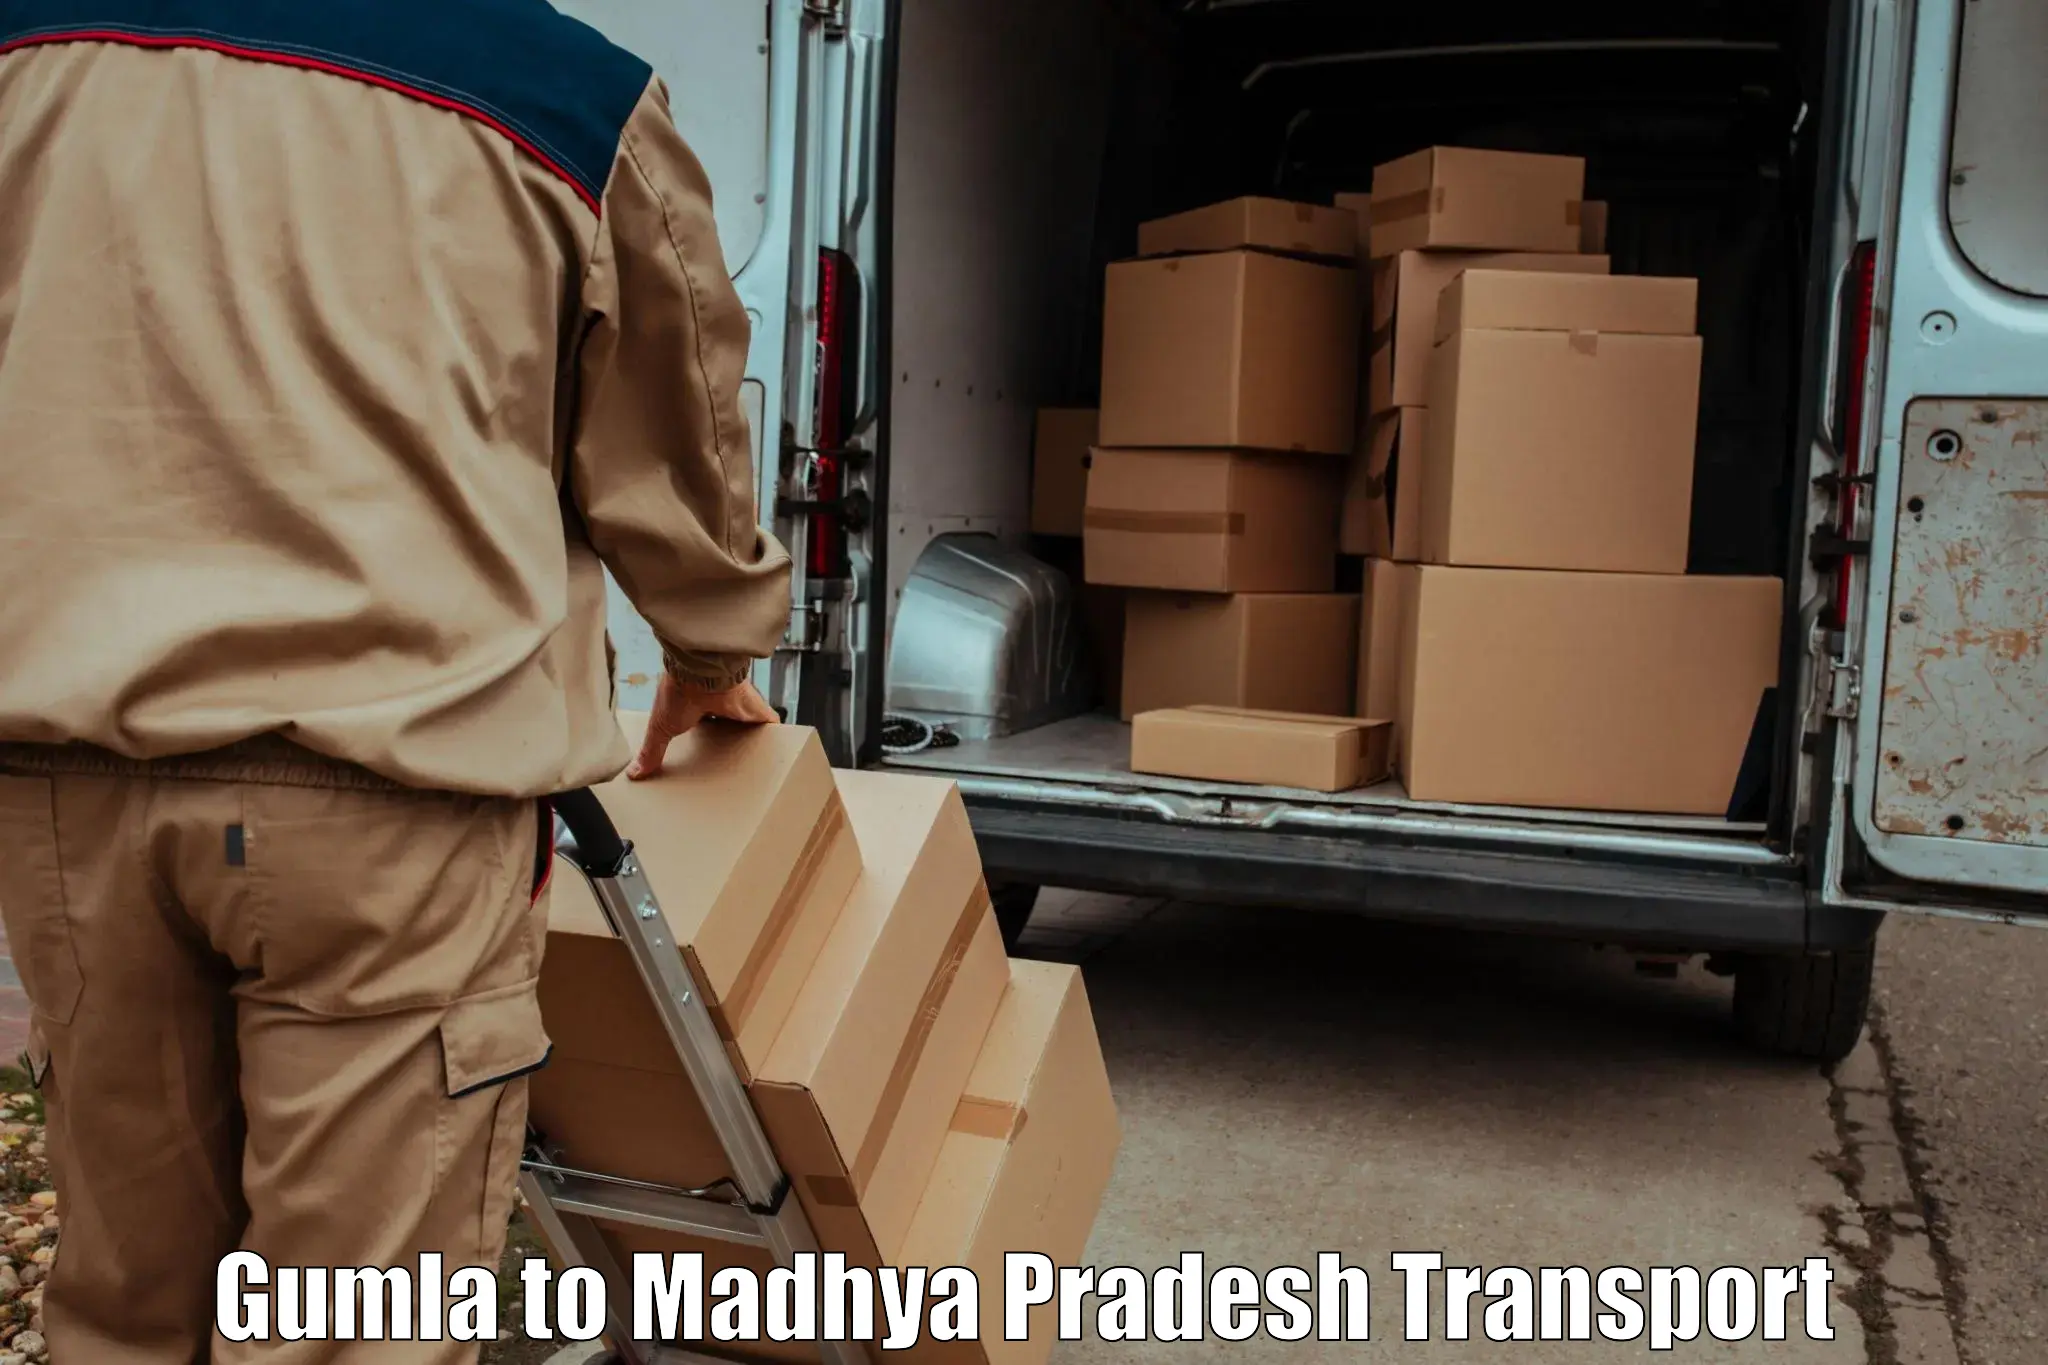 Cargo transport services Gumla to Maheshwar